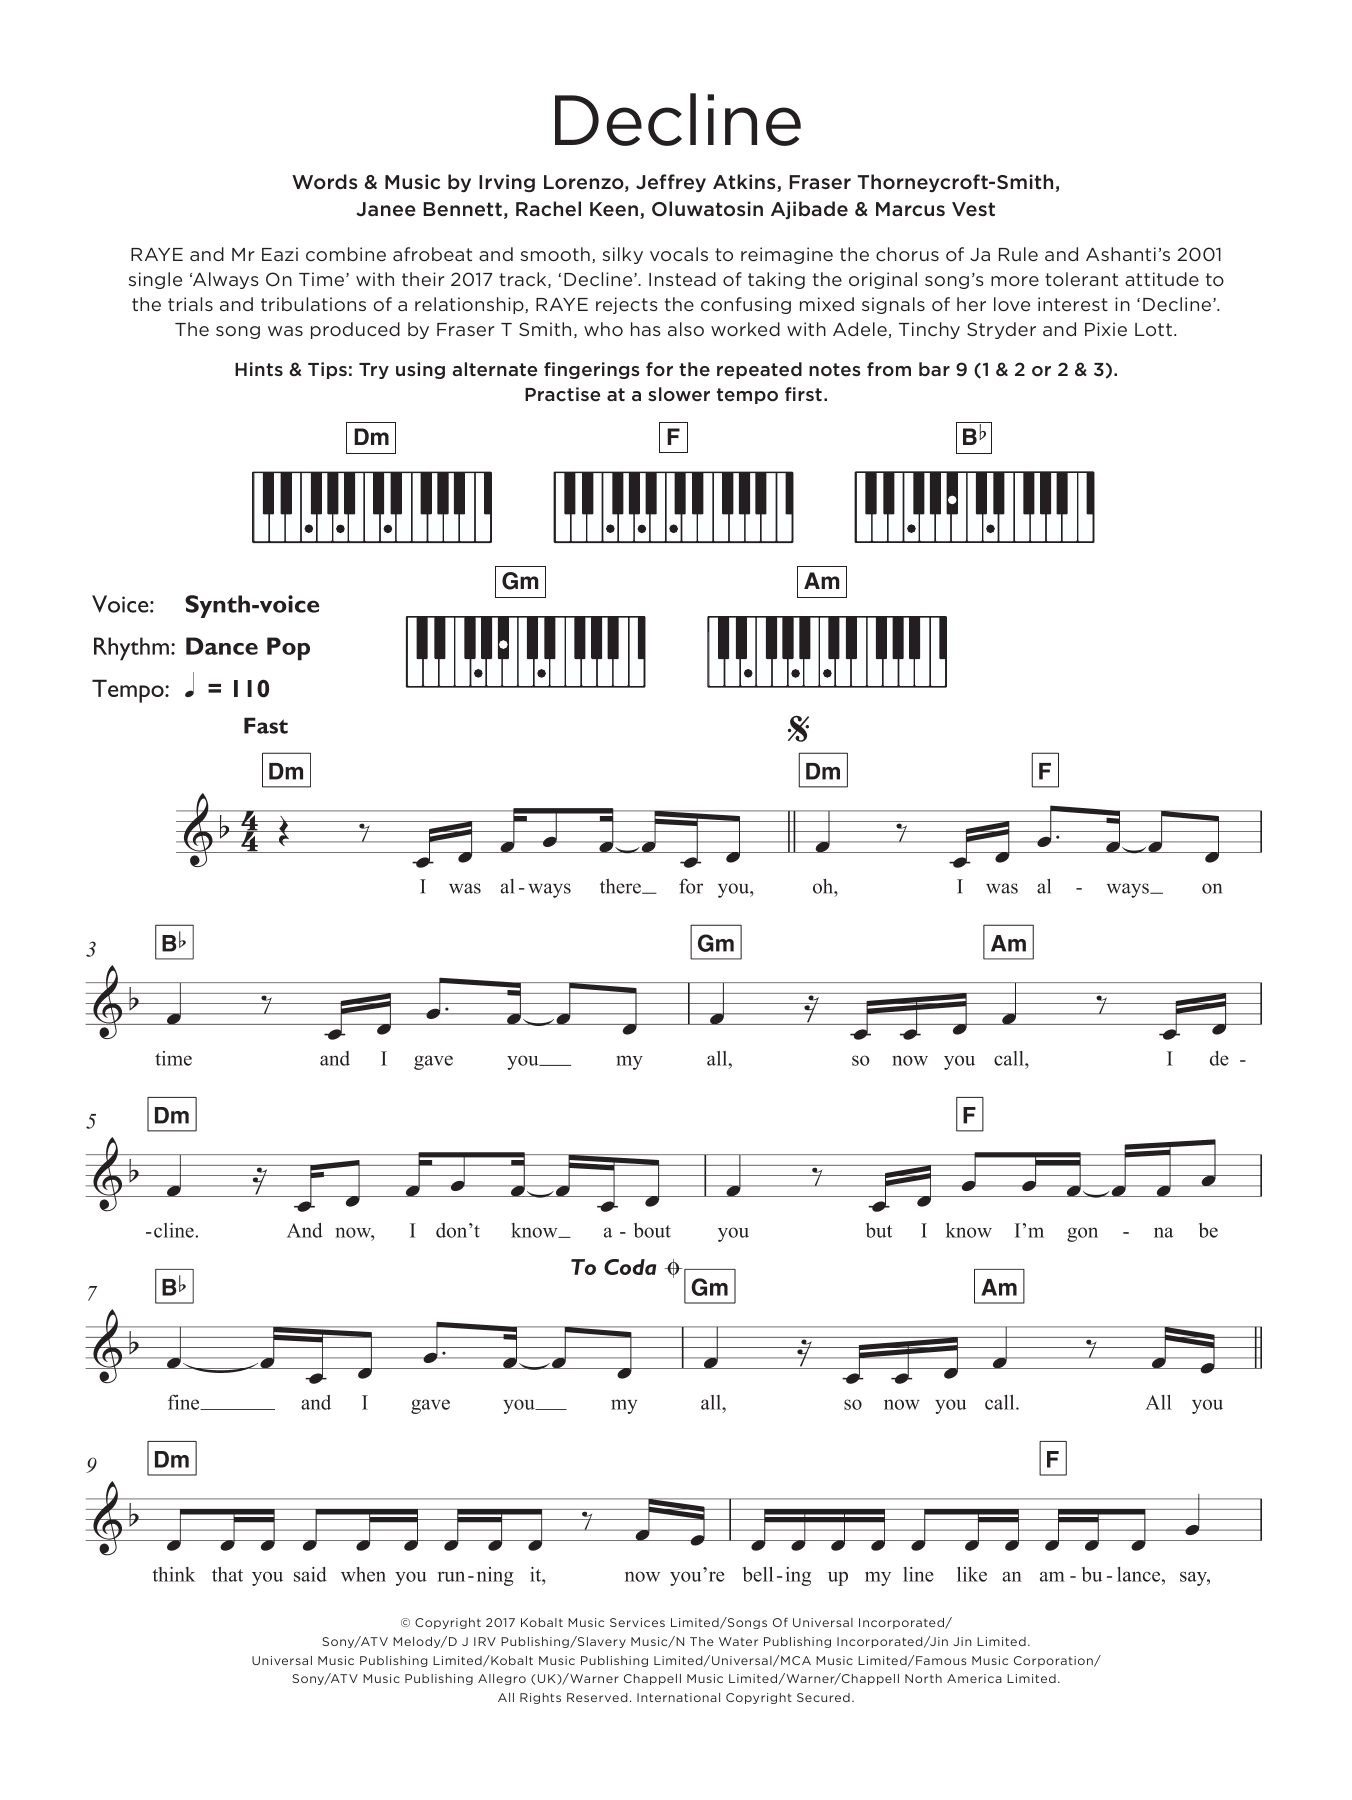 Download RAYE & Mr Eazi Decline Sheet Music and learn how to play Keyboard PDF digital score in minutes